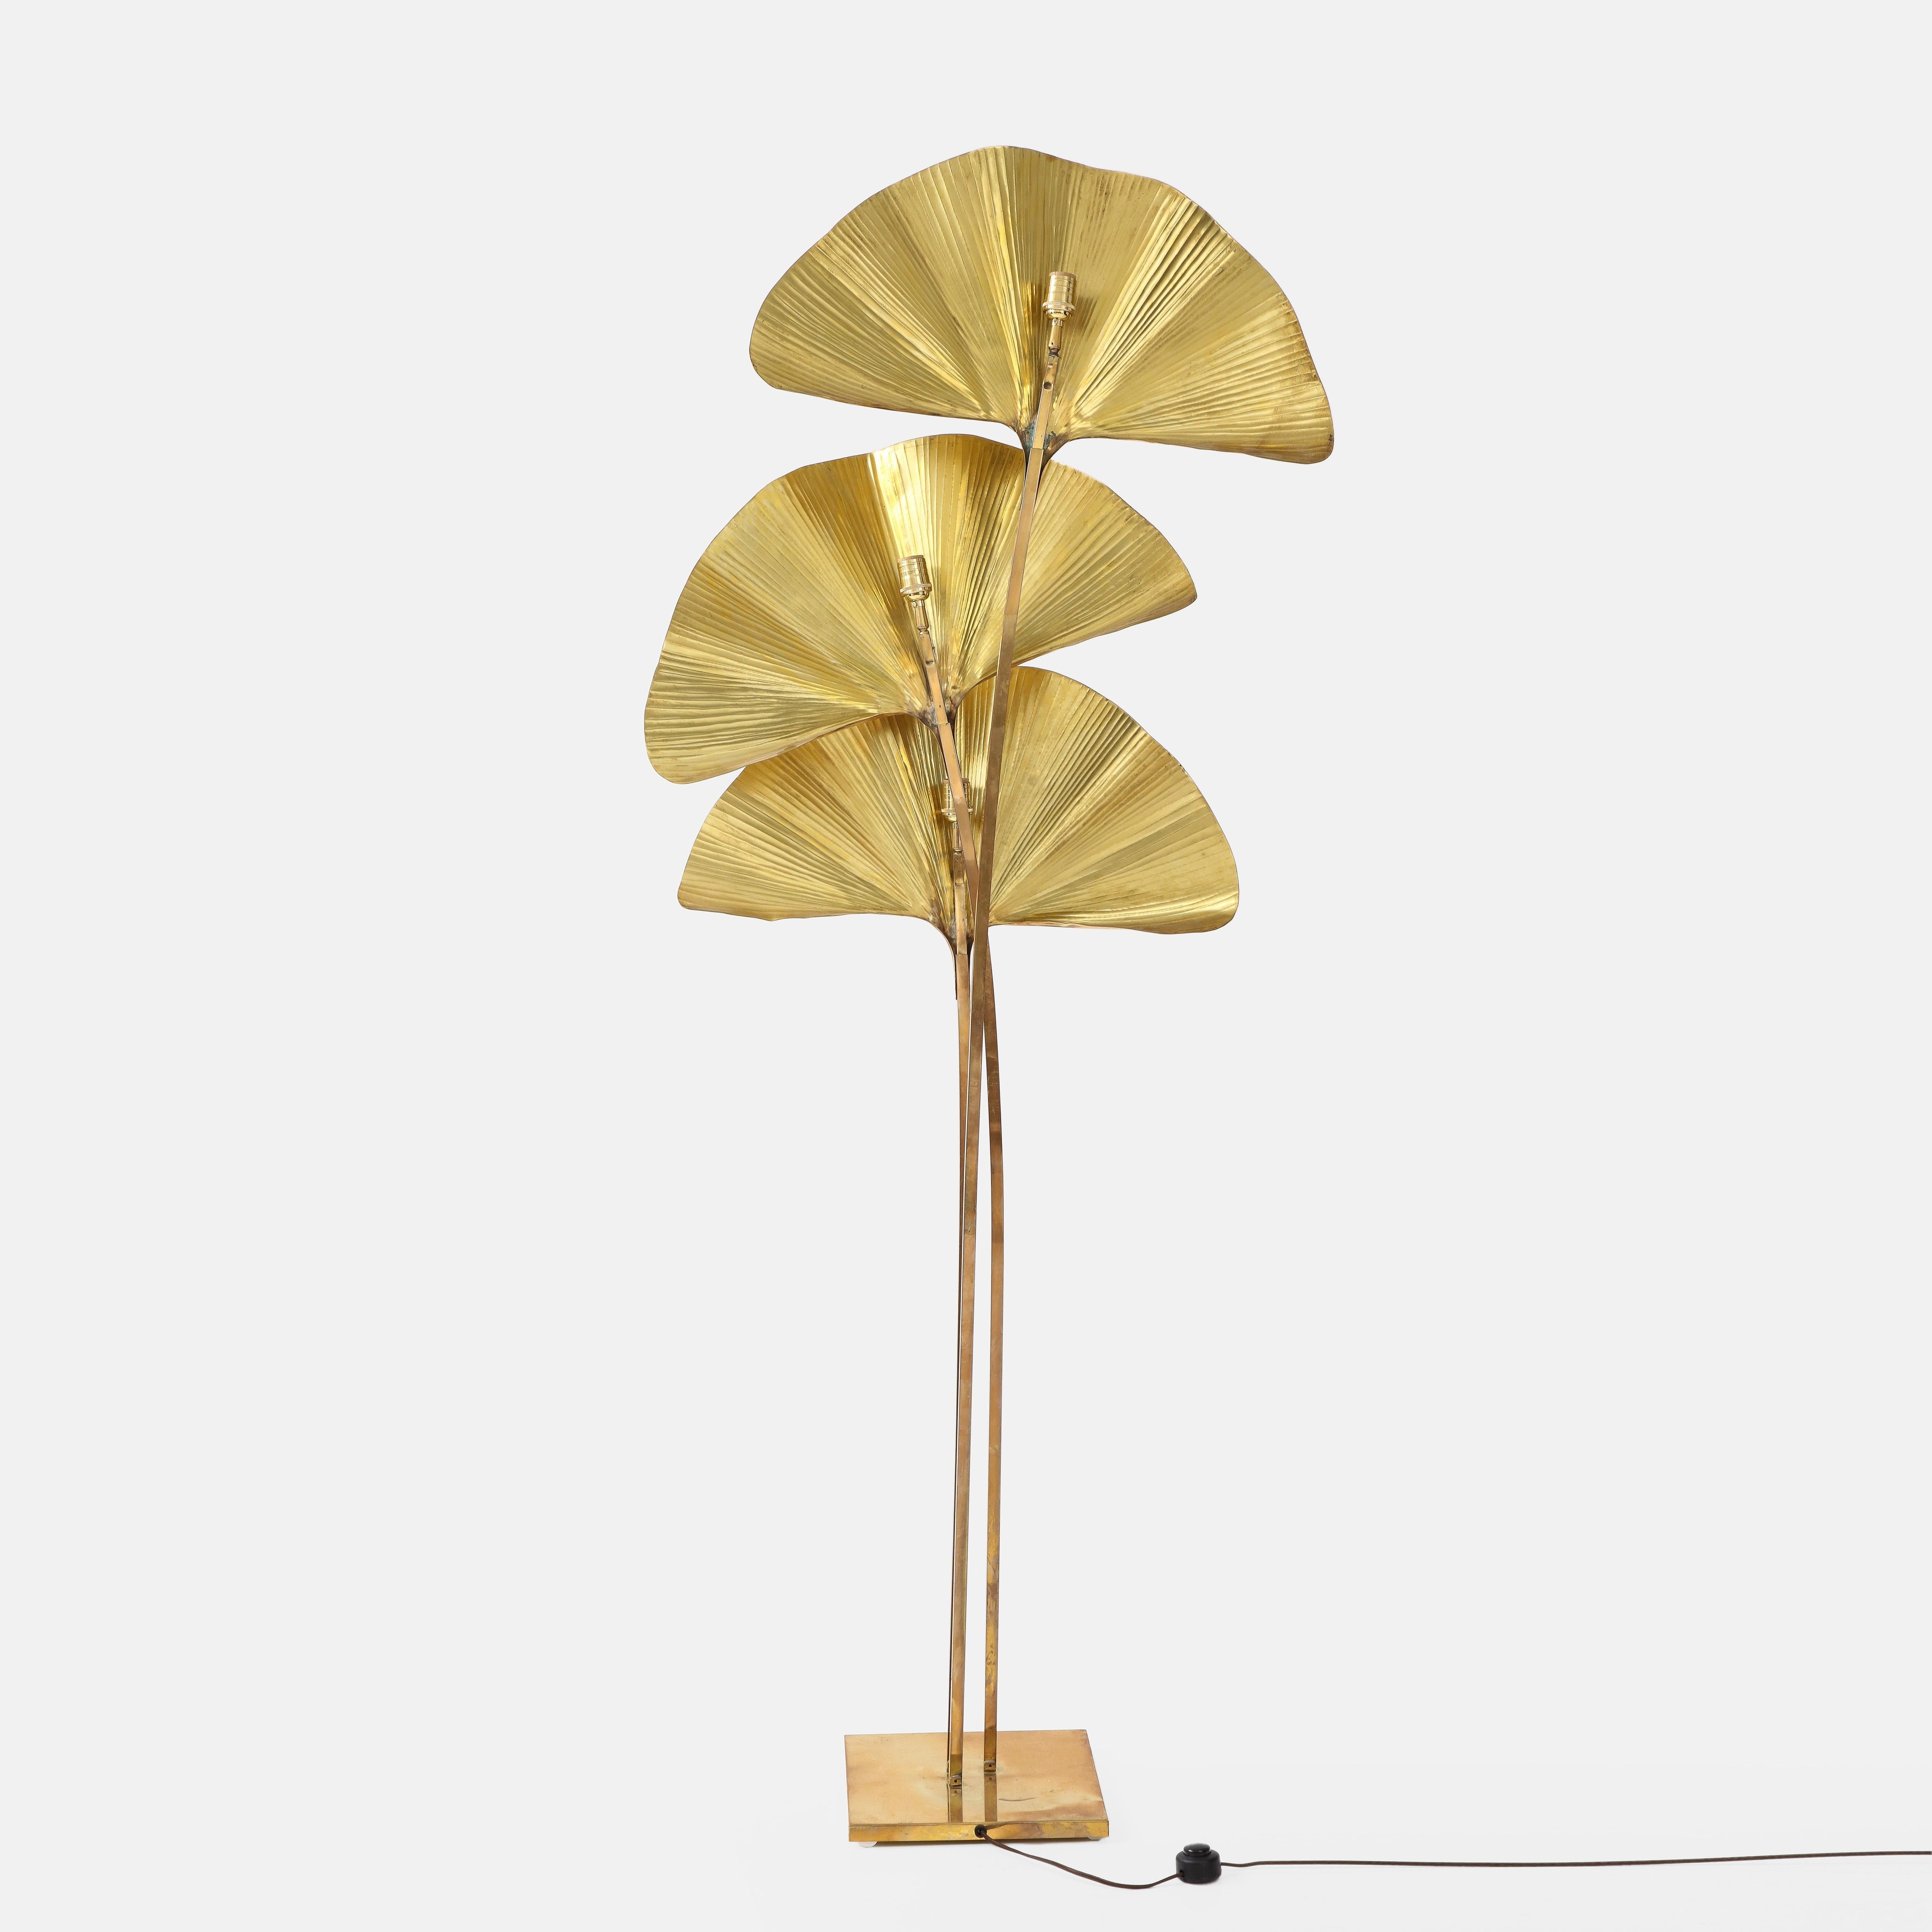 Embossed Carlo Giorgi for Bottega Gadda Gingko Leaf Brass Floor Lamp, Italy, 1970s